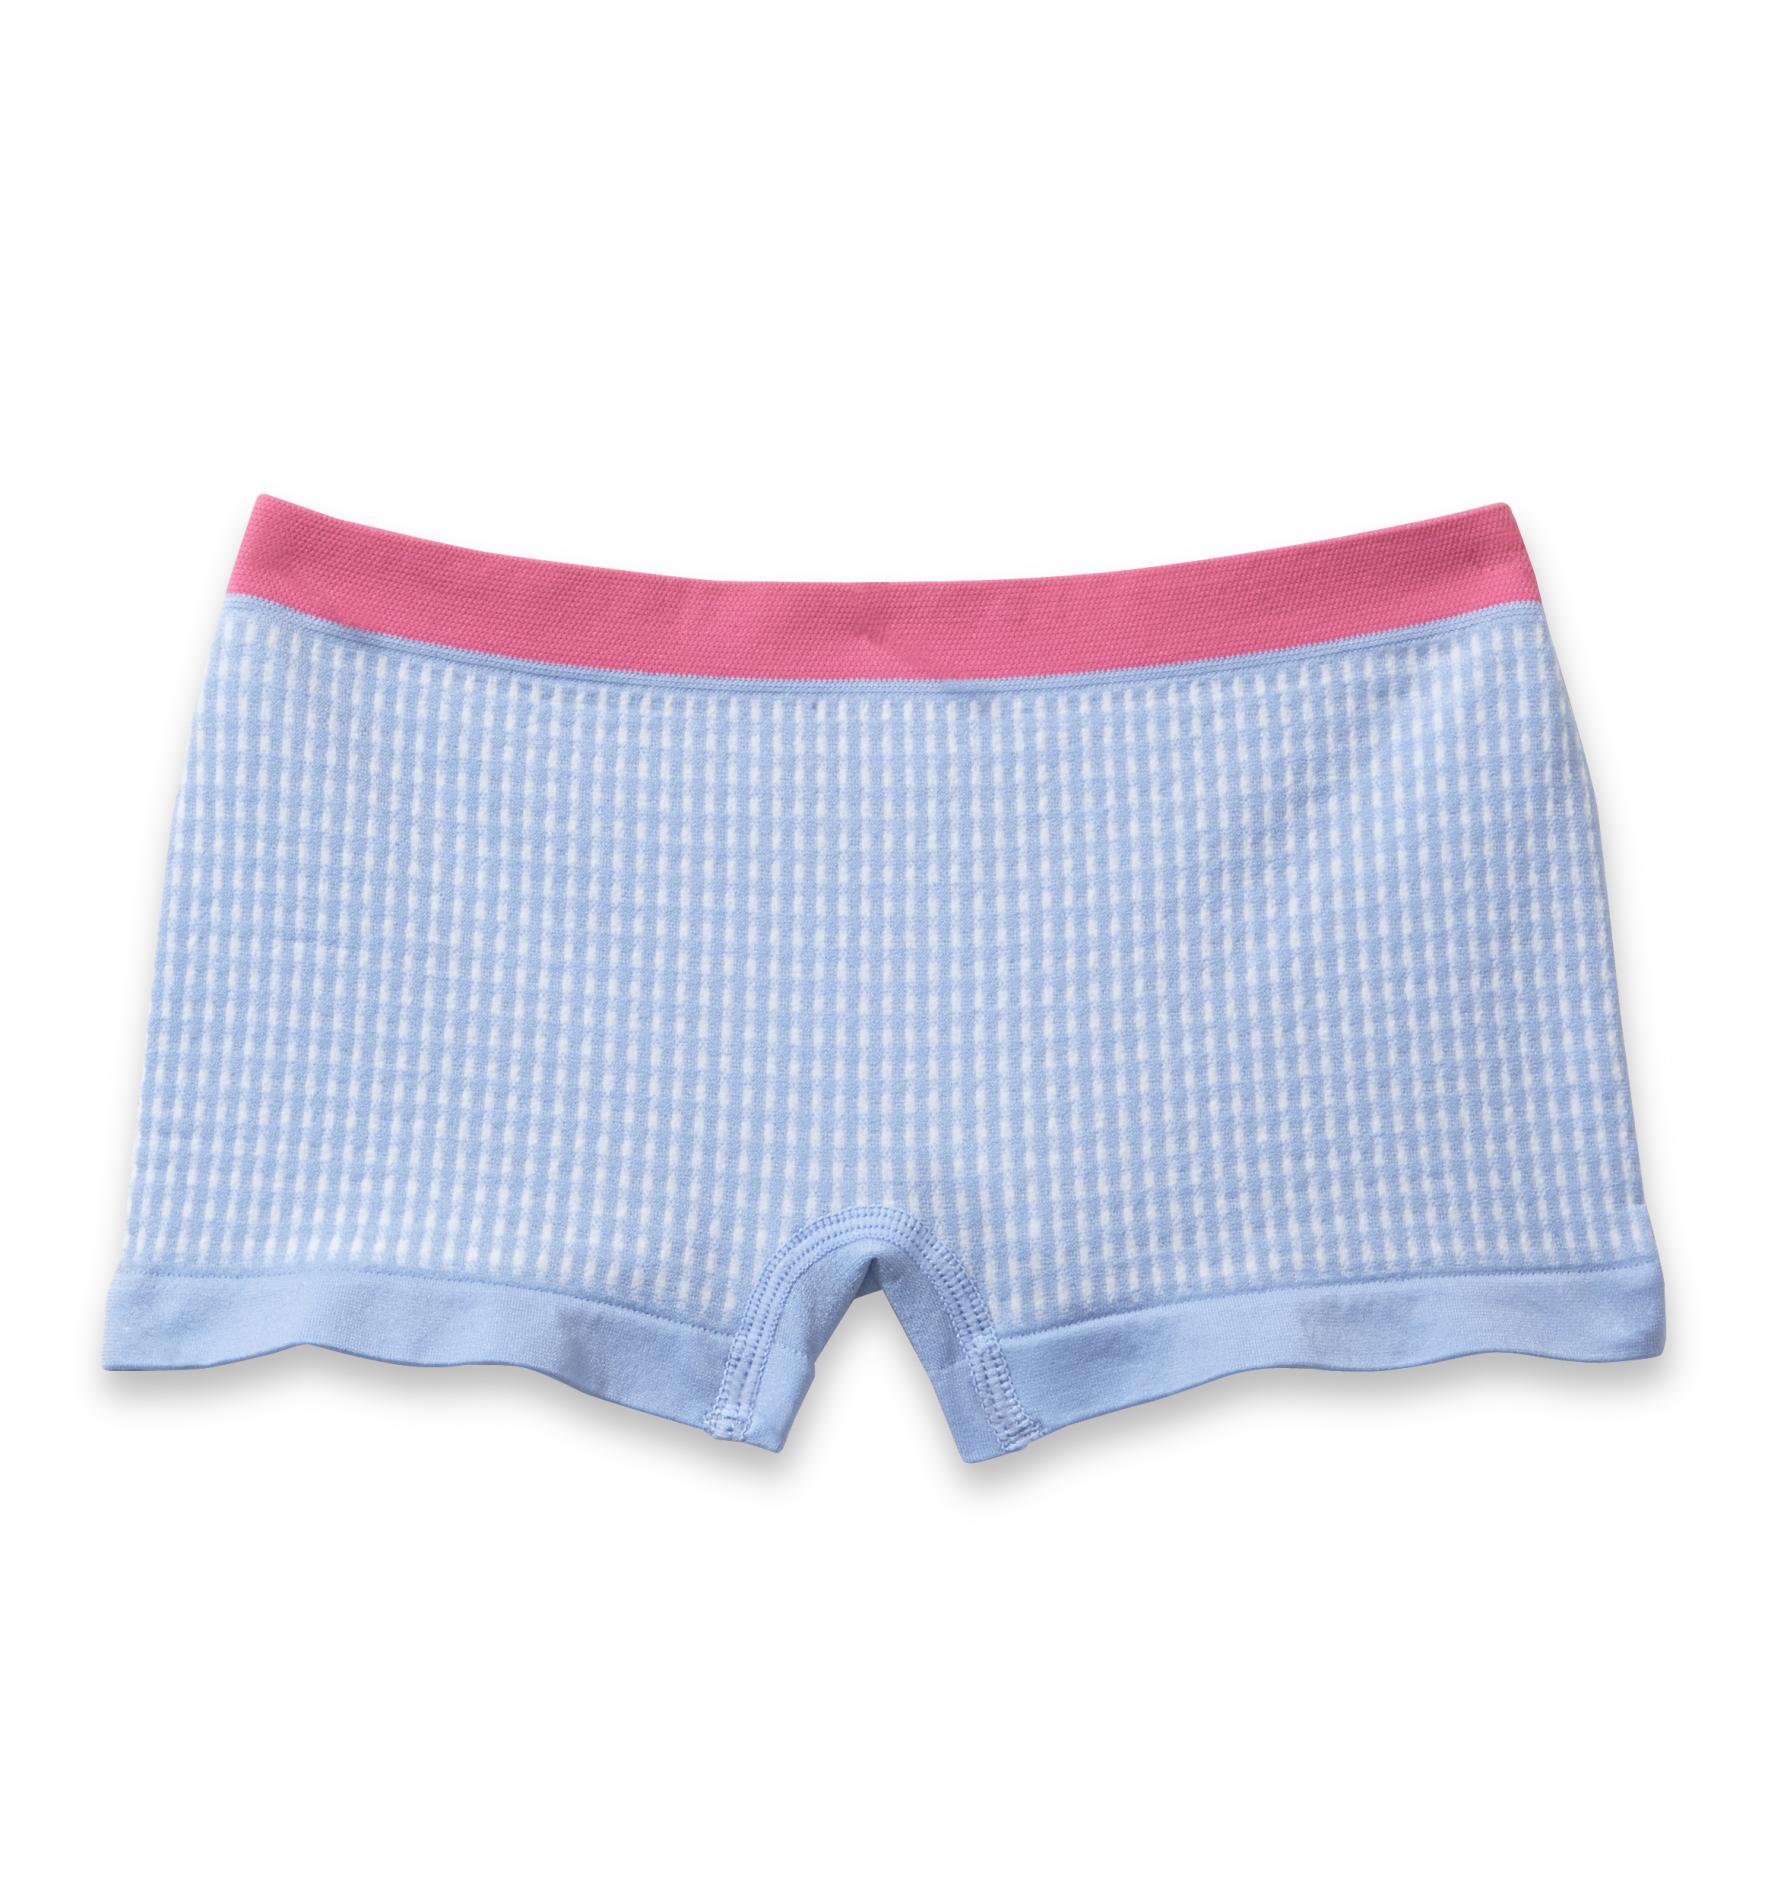 Maidenform Girl's Boy Short Panties - Gingham Check